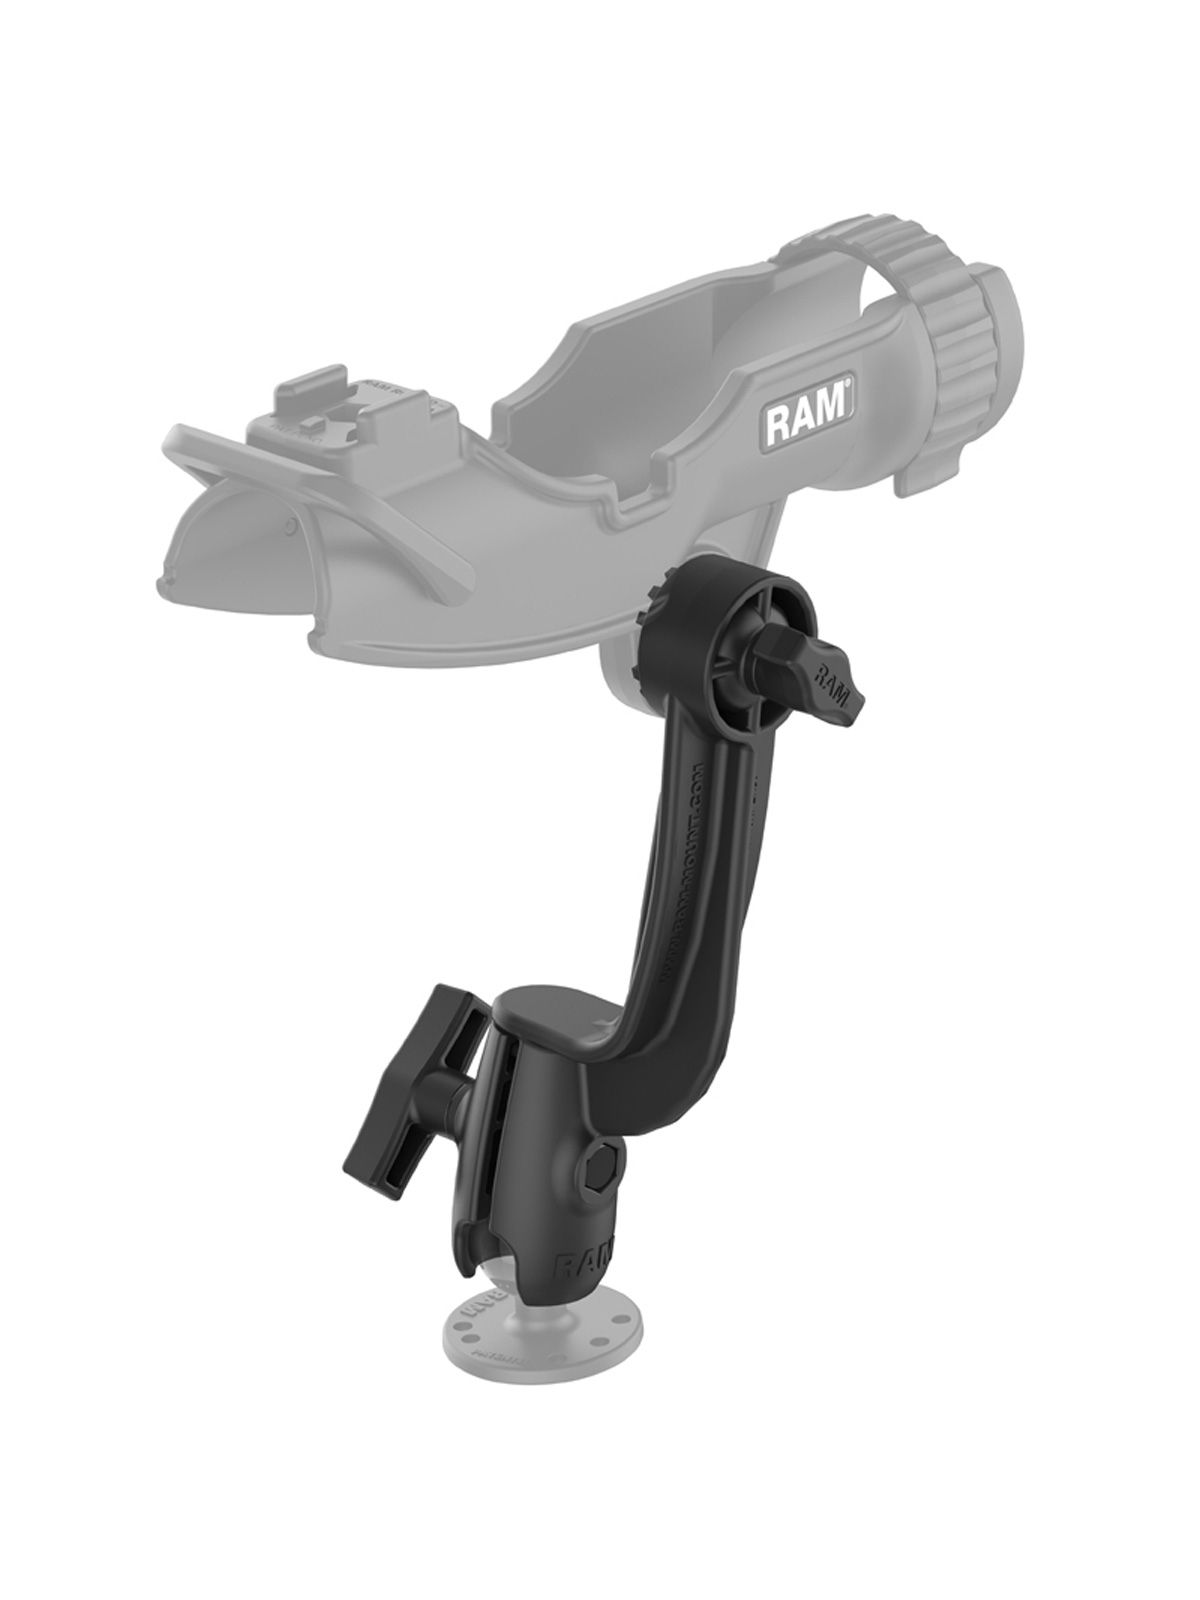 RAM Mounts Ratchet-Arm mit C-Kugel Aufnahme (1,5 Zoll) - Verbundstoff, Ratchet-System